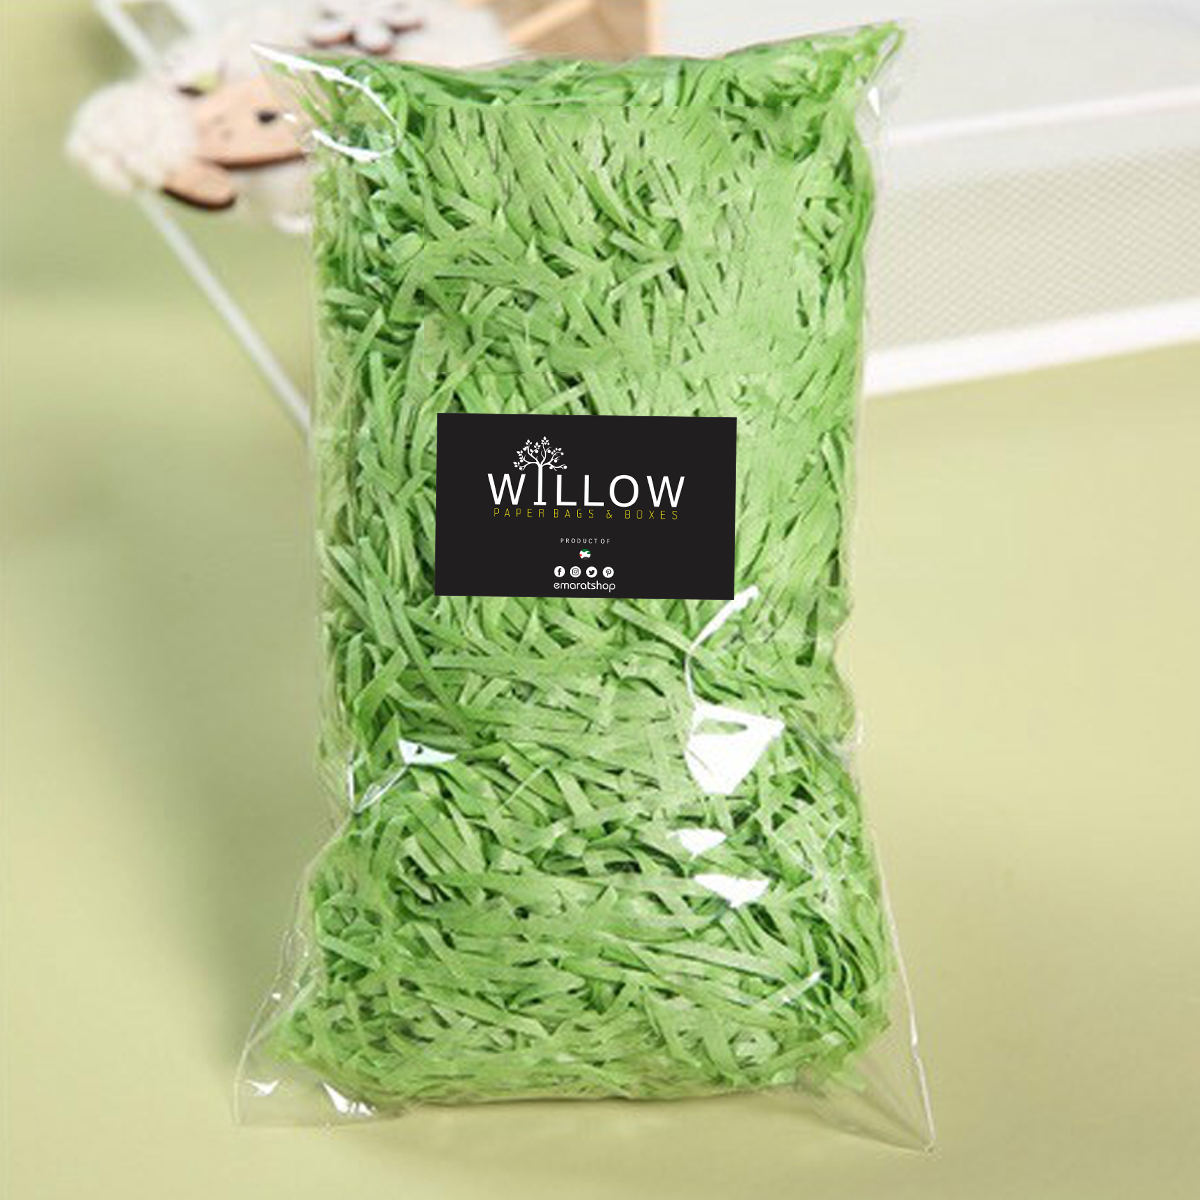 100g/Bag Professional laser Paper Cut Shredded Crinkle Filling Paper Confetti For Packing - BLUE